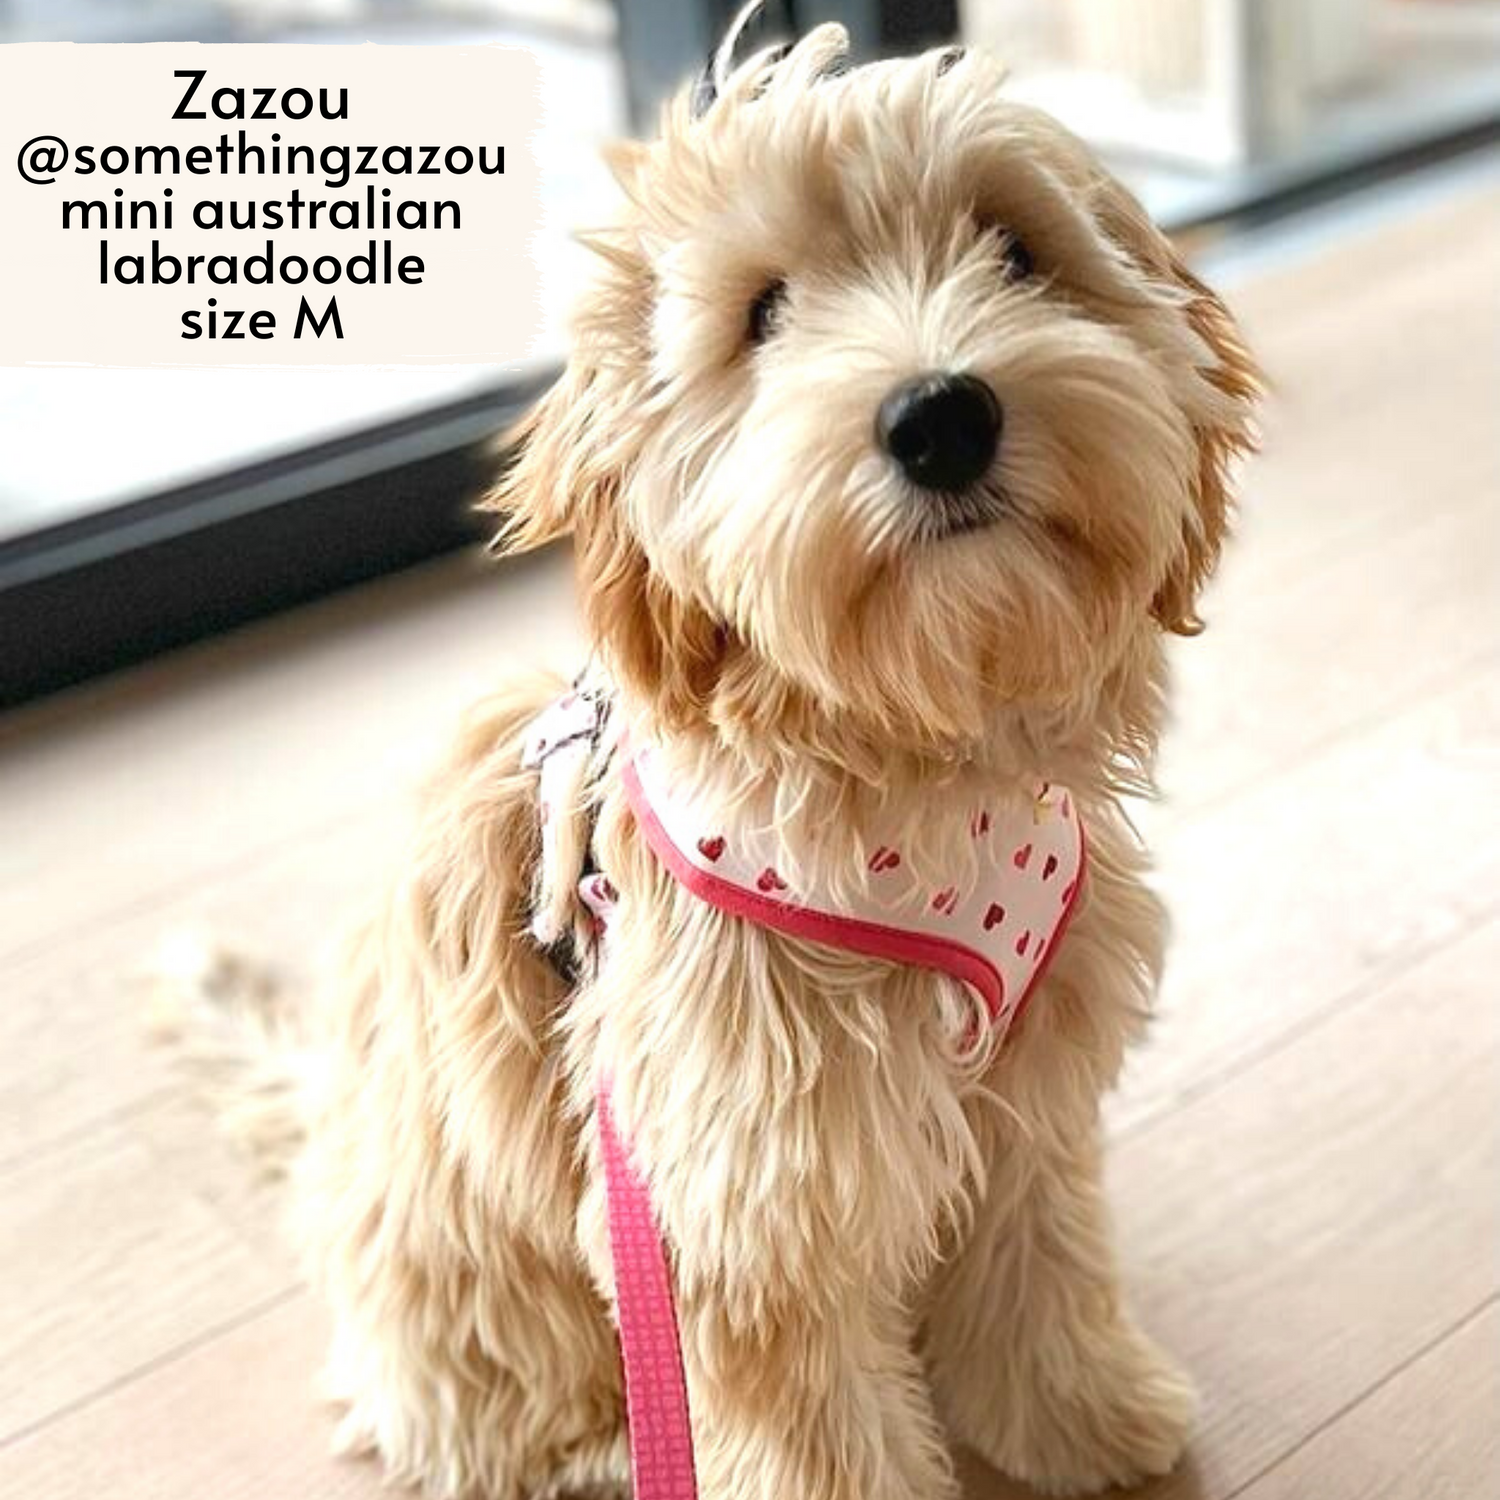 Pata Paw Blush Hearts harness worn by a medium-sized dog, Zazou, Mini Australian Labradoodle